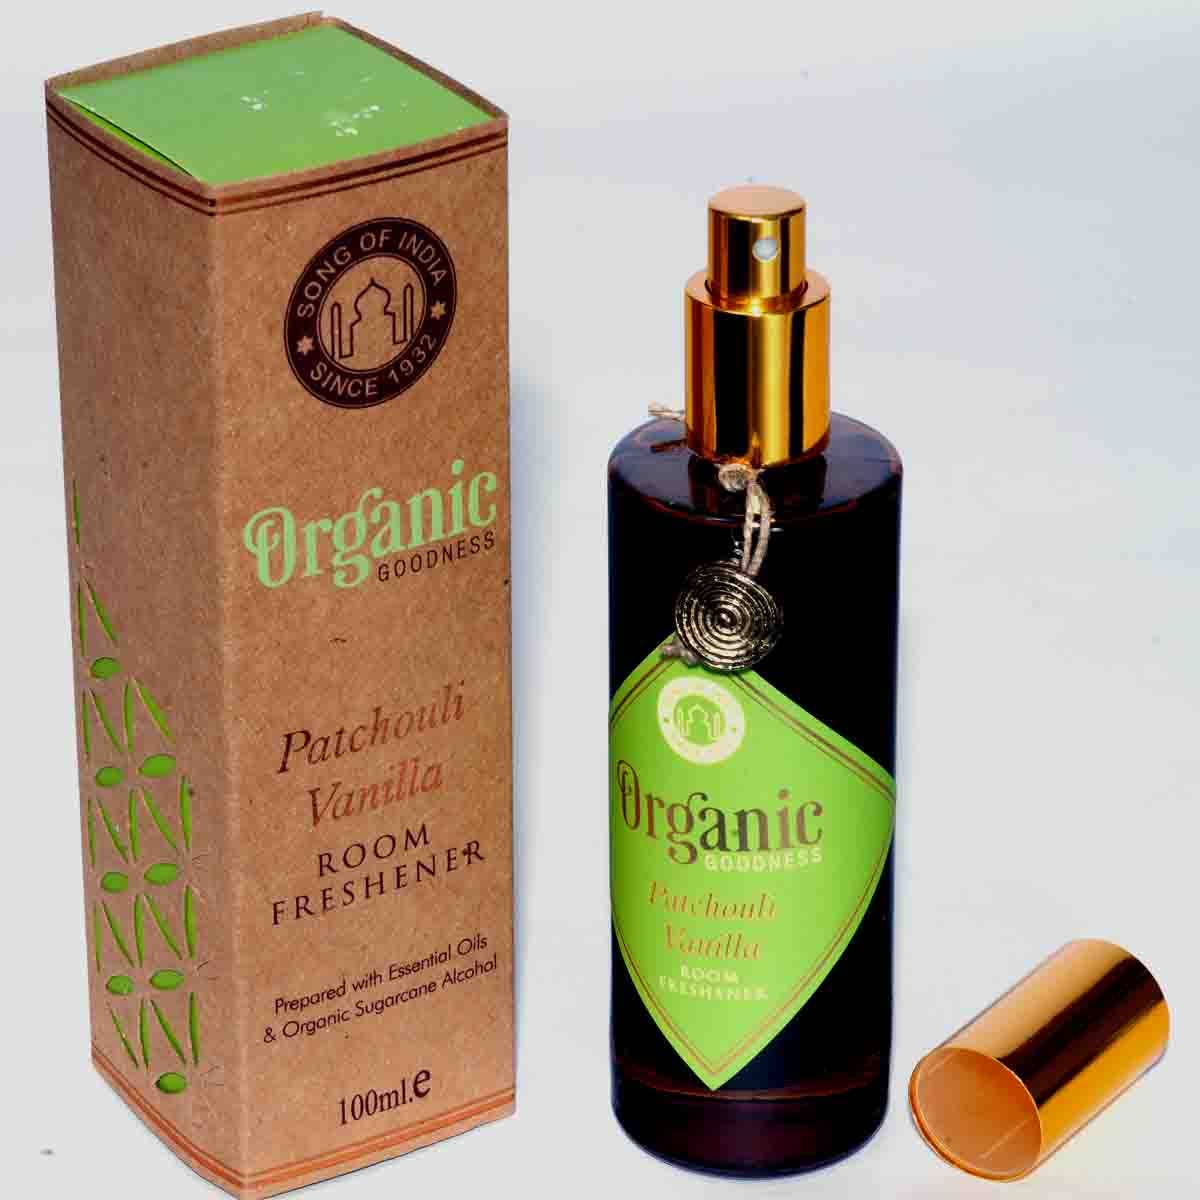 Patchouli Vanilla - Organic Goodness Room Freshner - Spiral Circle